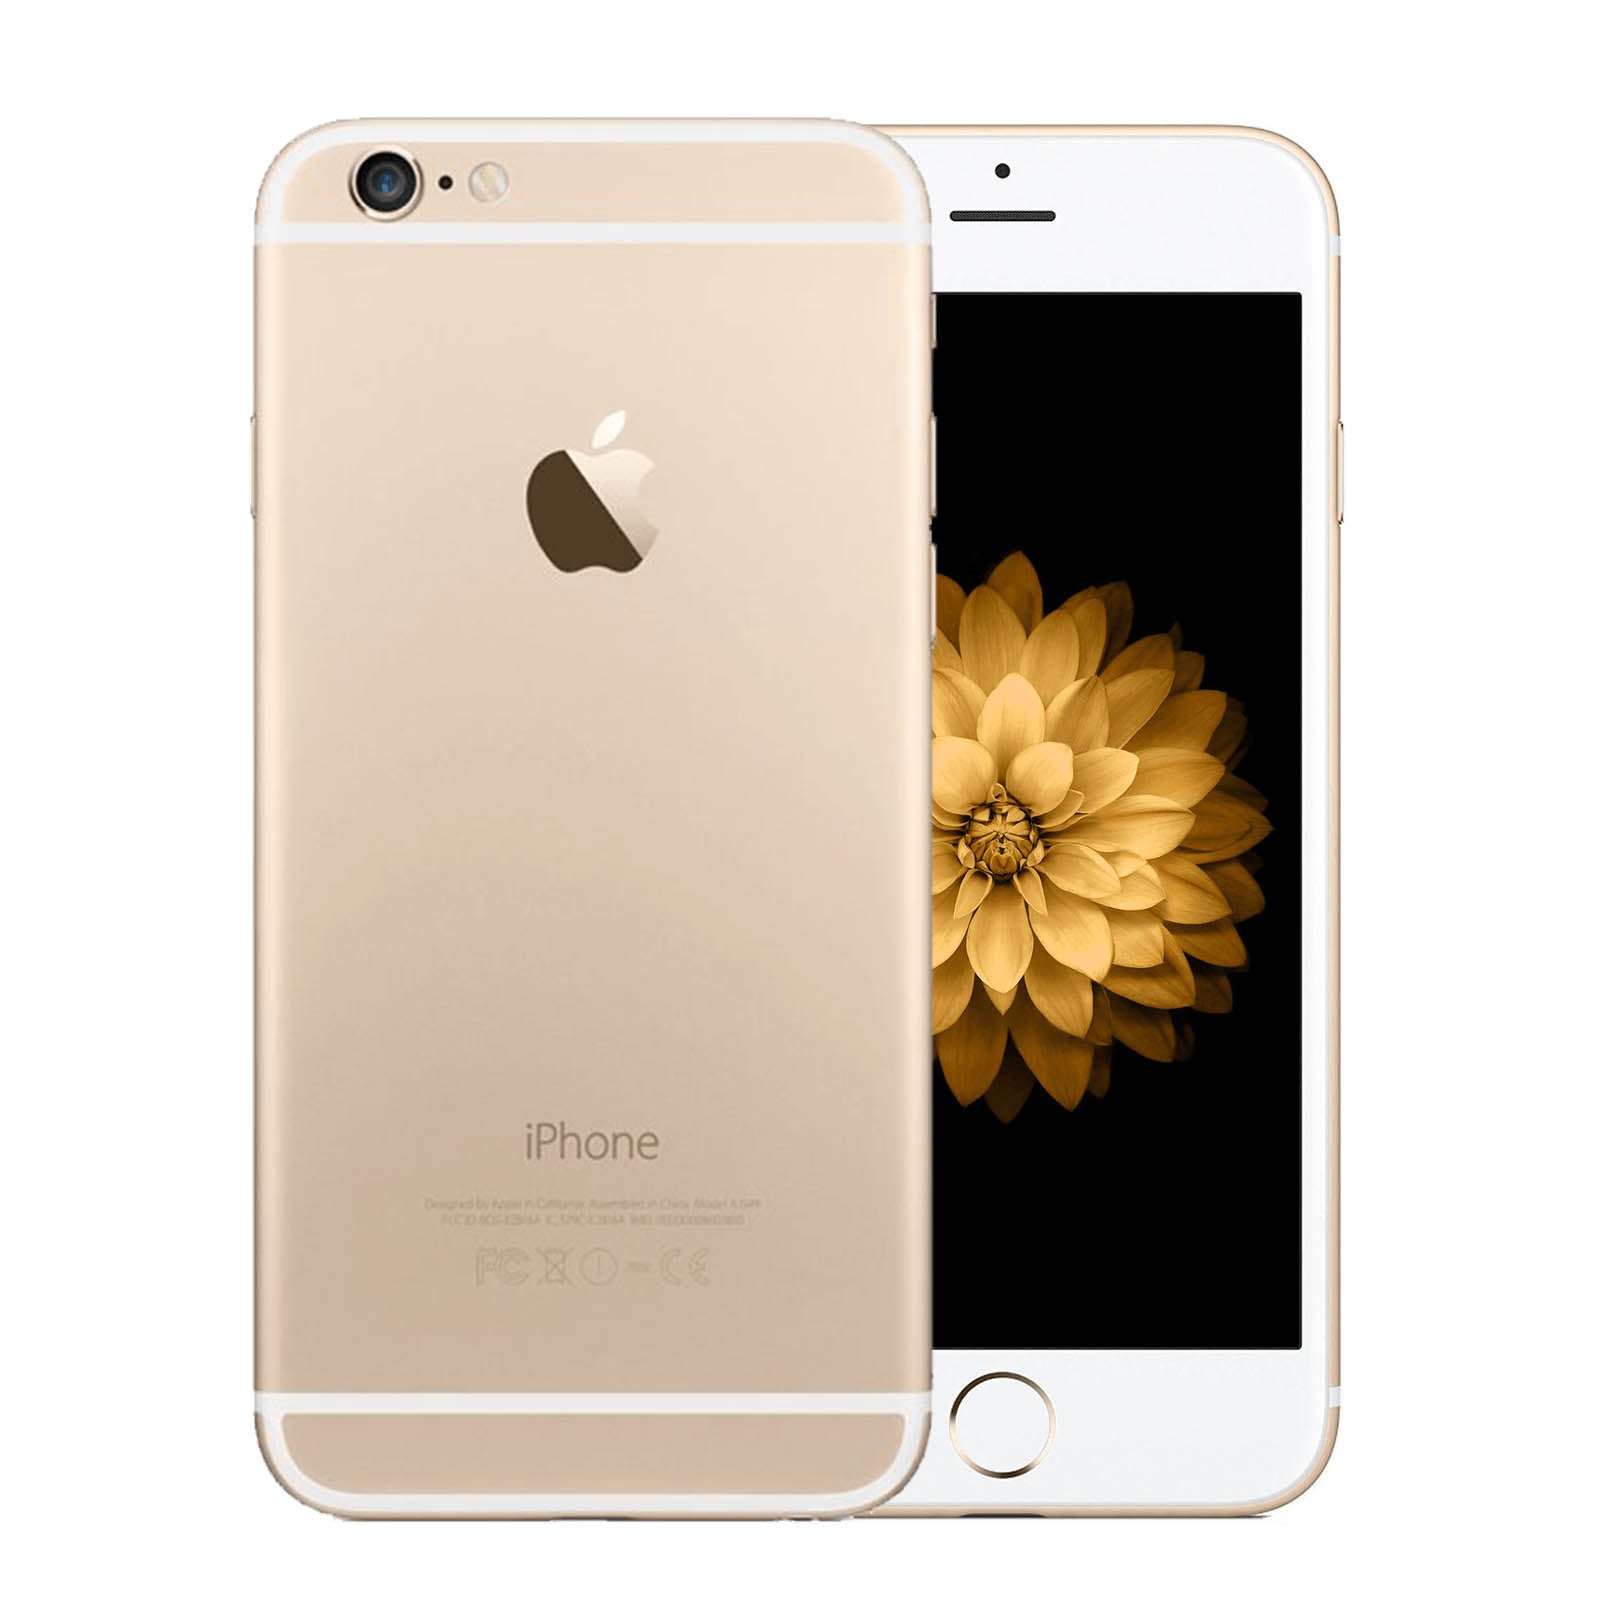 Apple iPhone 6 16GB Gold Very Good - Unlocked